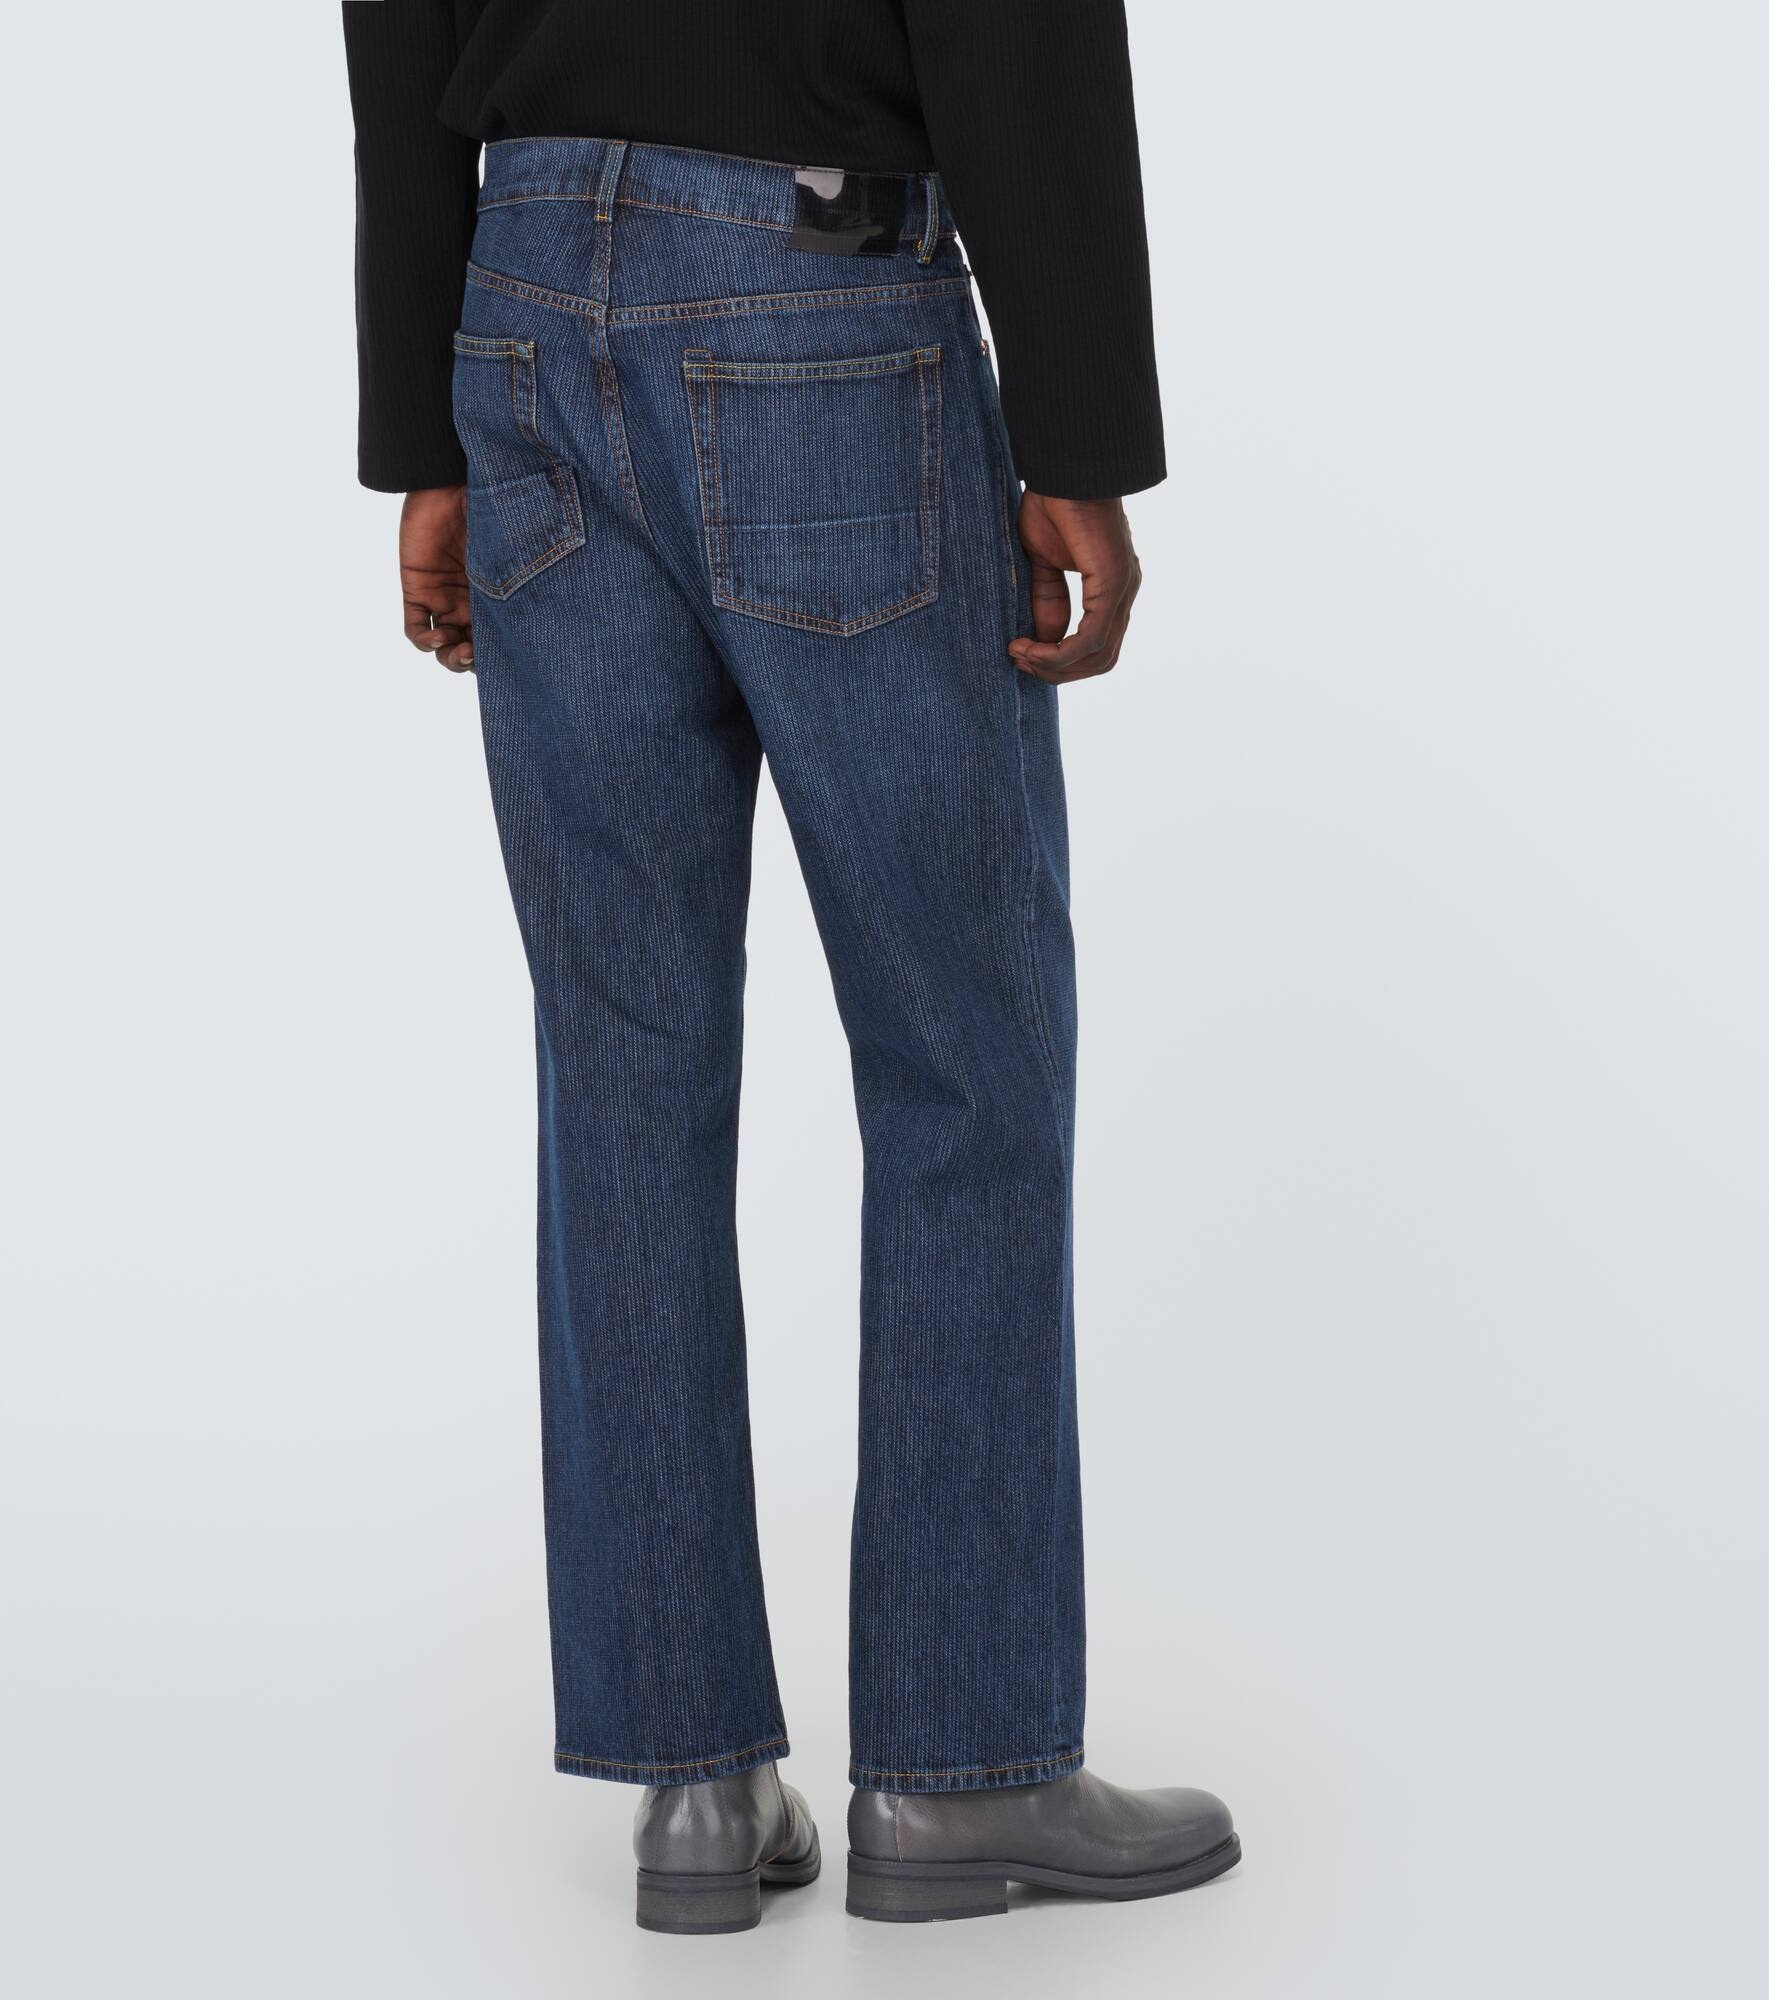 Third Cut straight jeans - 4